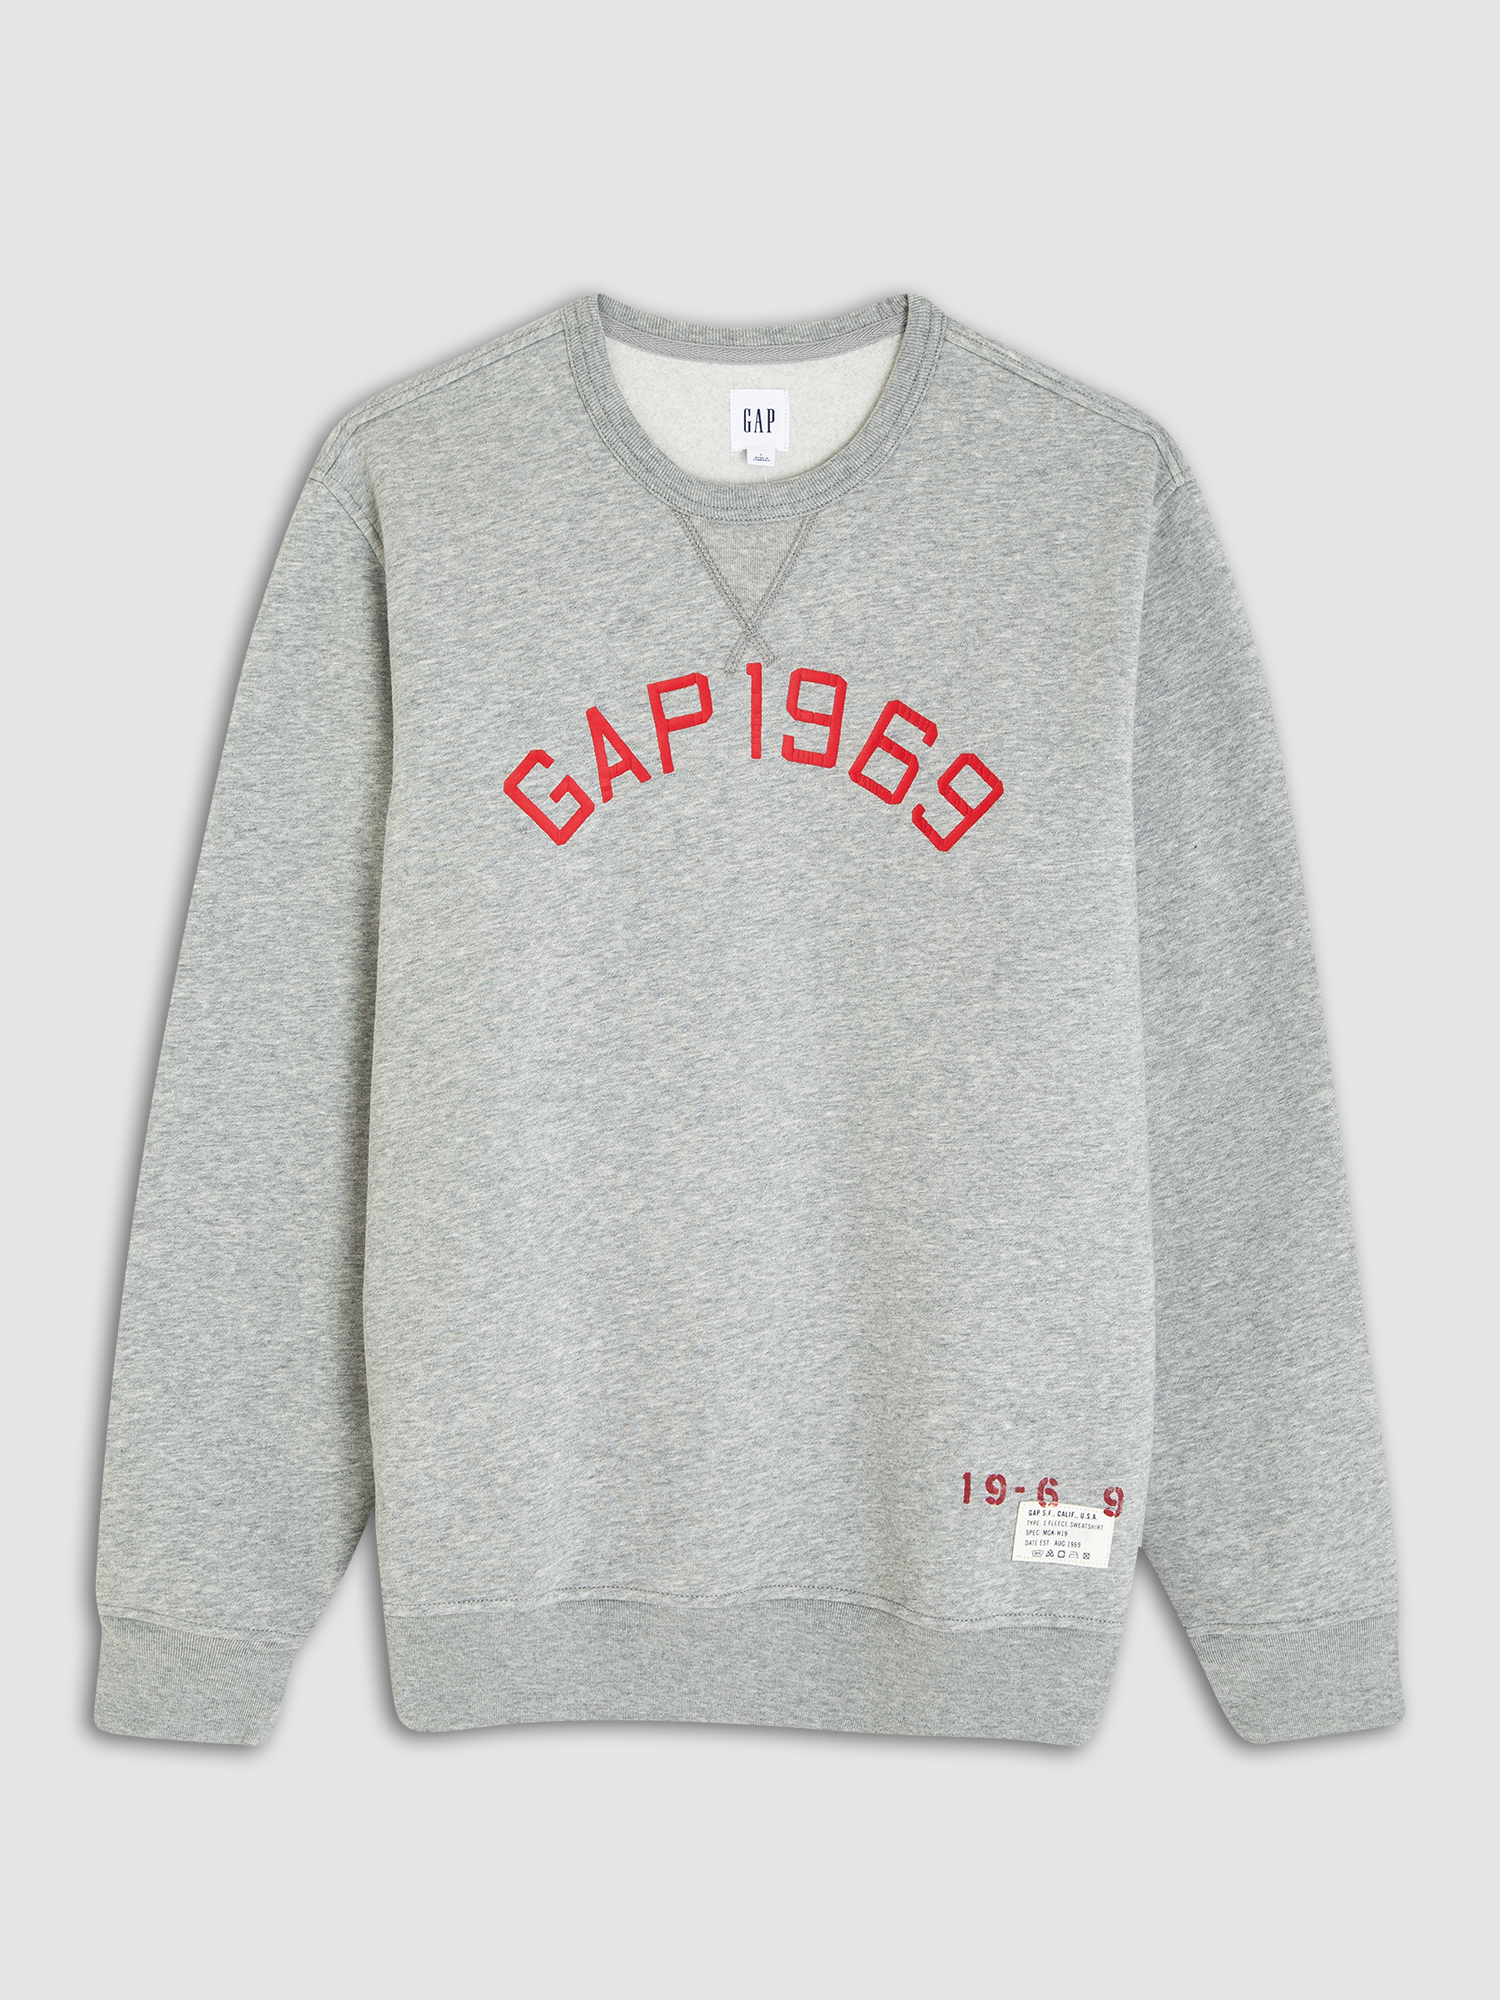 Gap Gap Logo Pullover Sweatshirt. 2